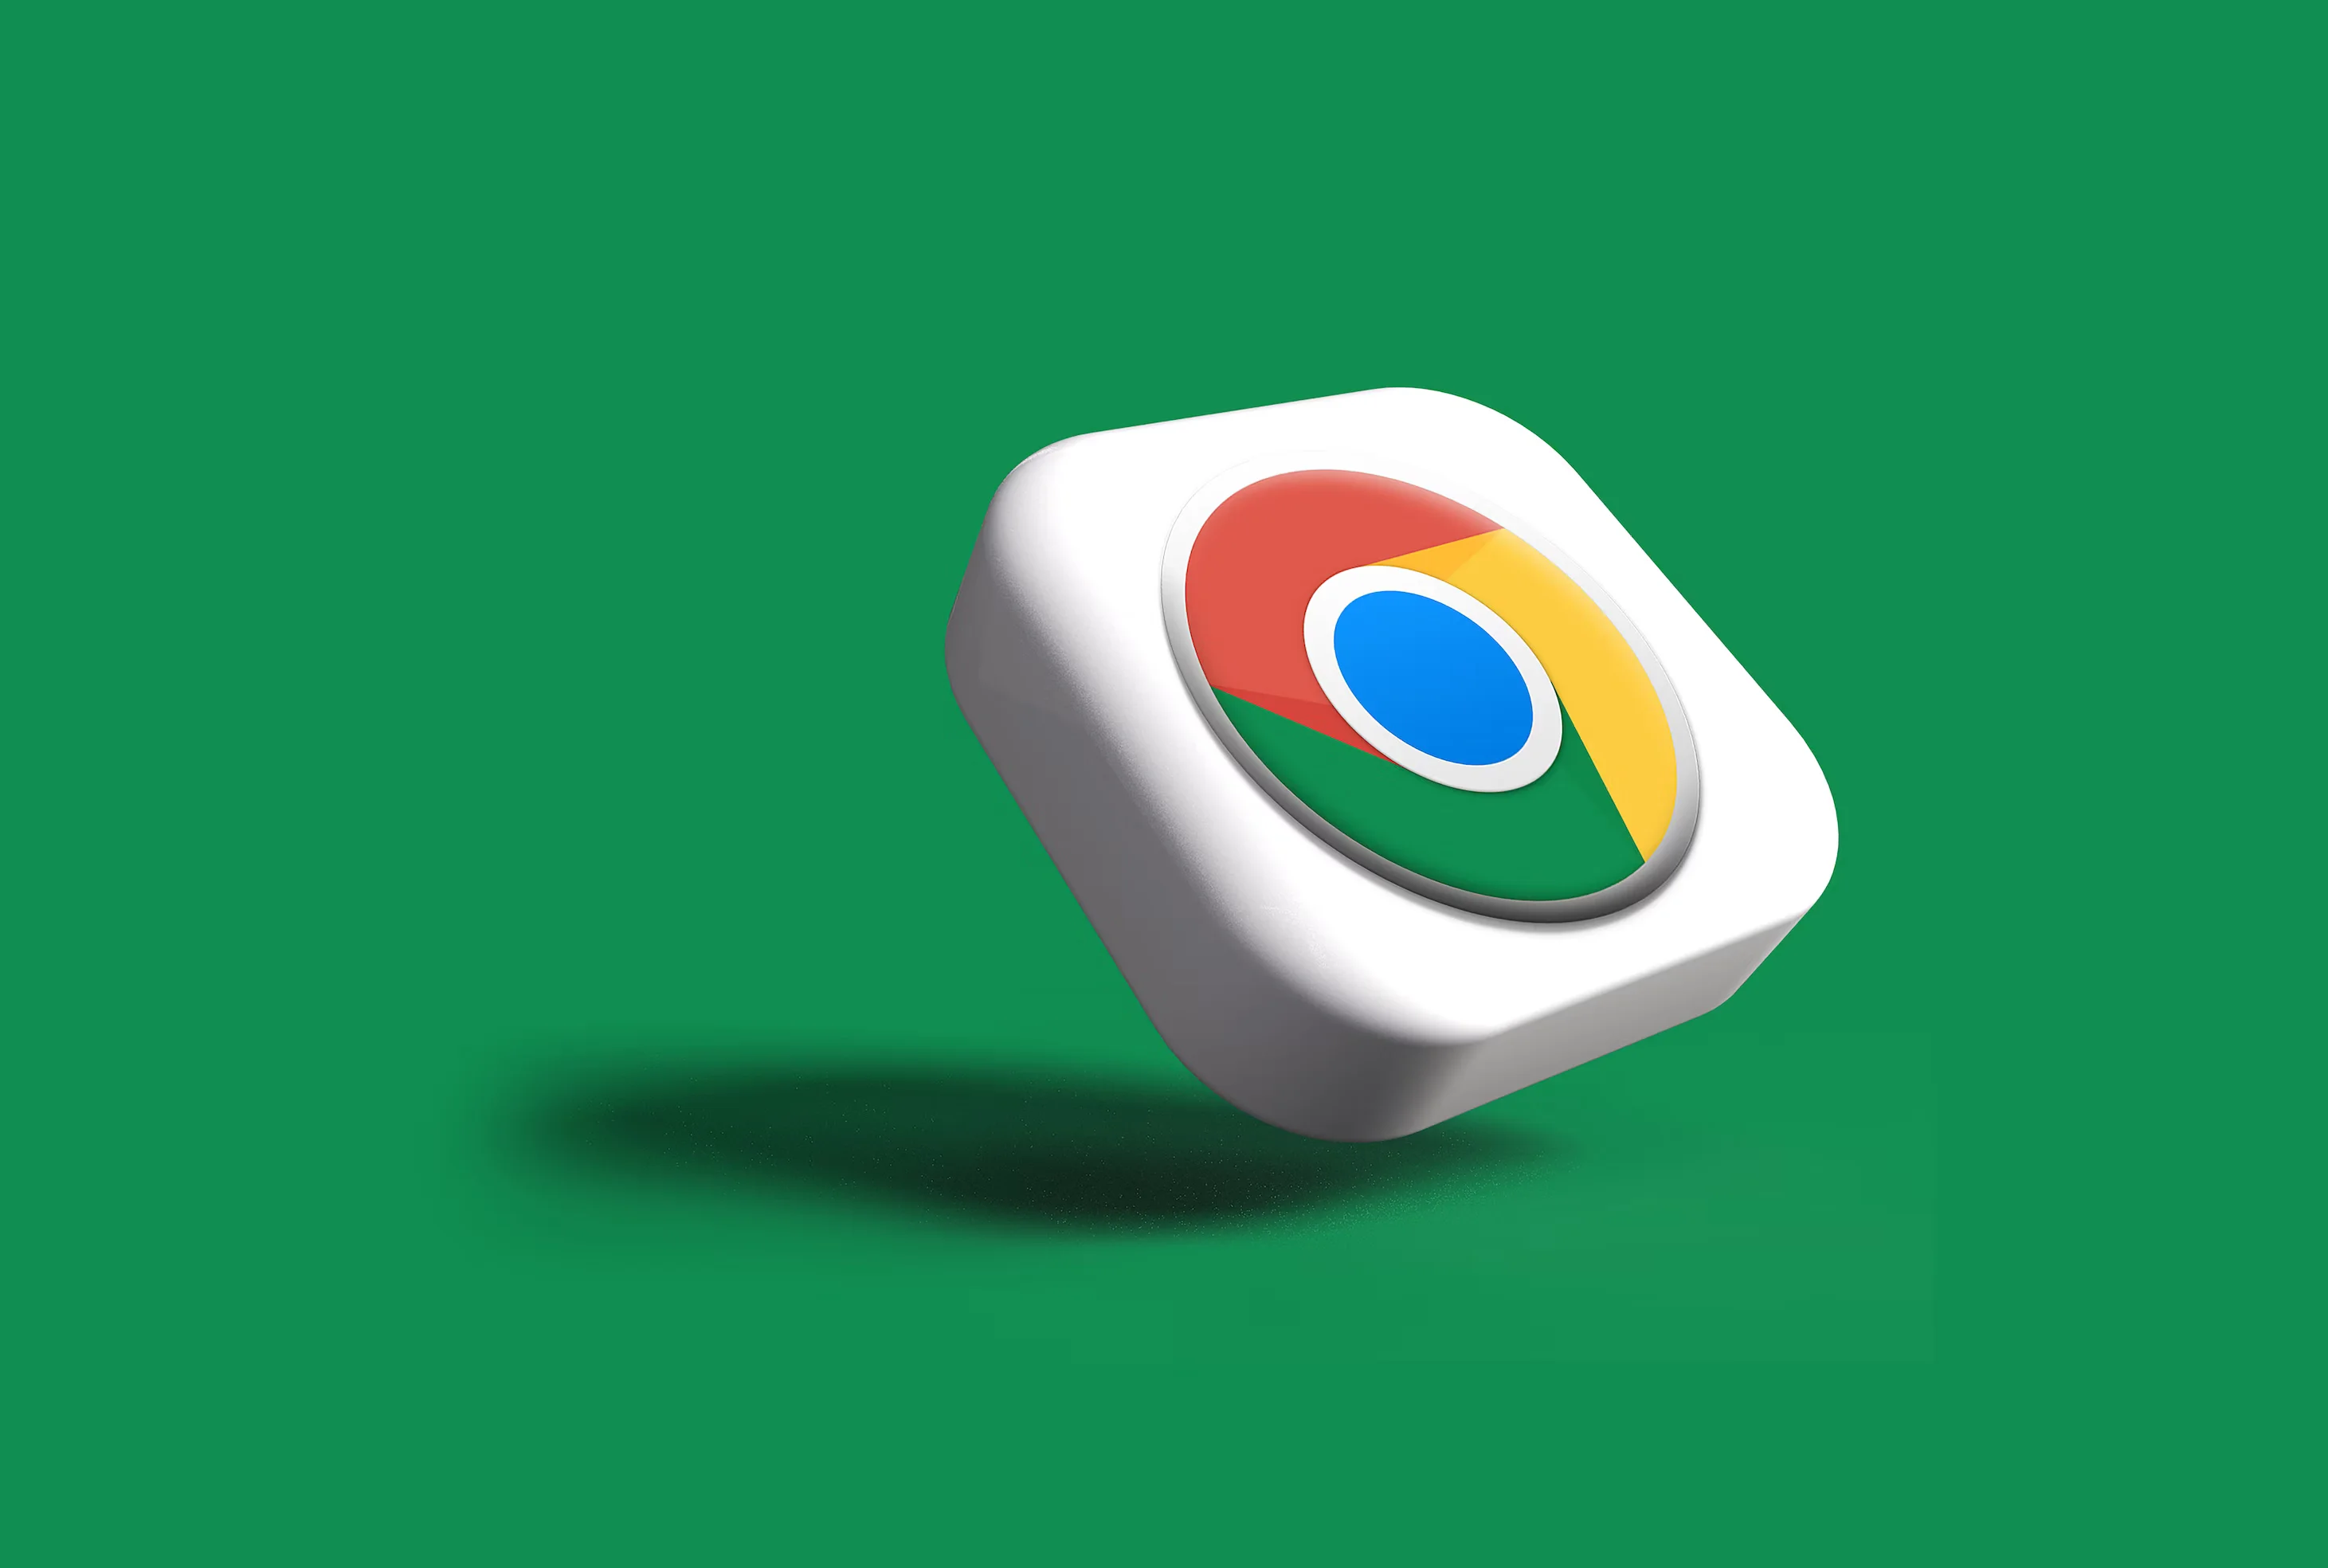 About Chrome Extension Development